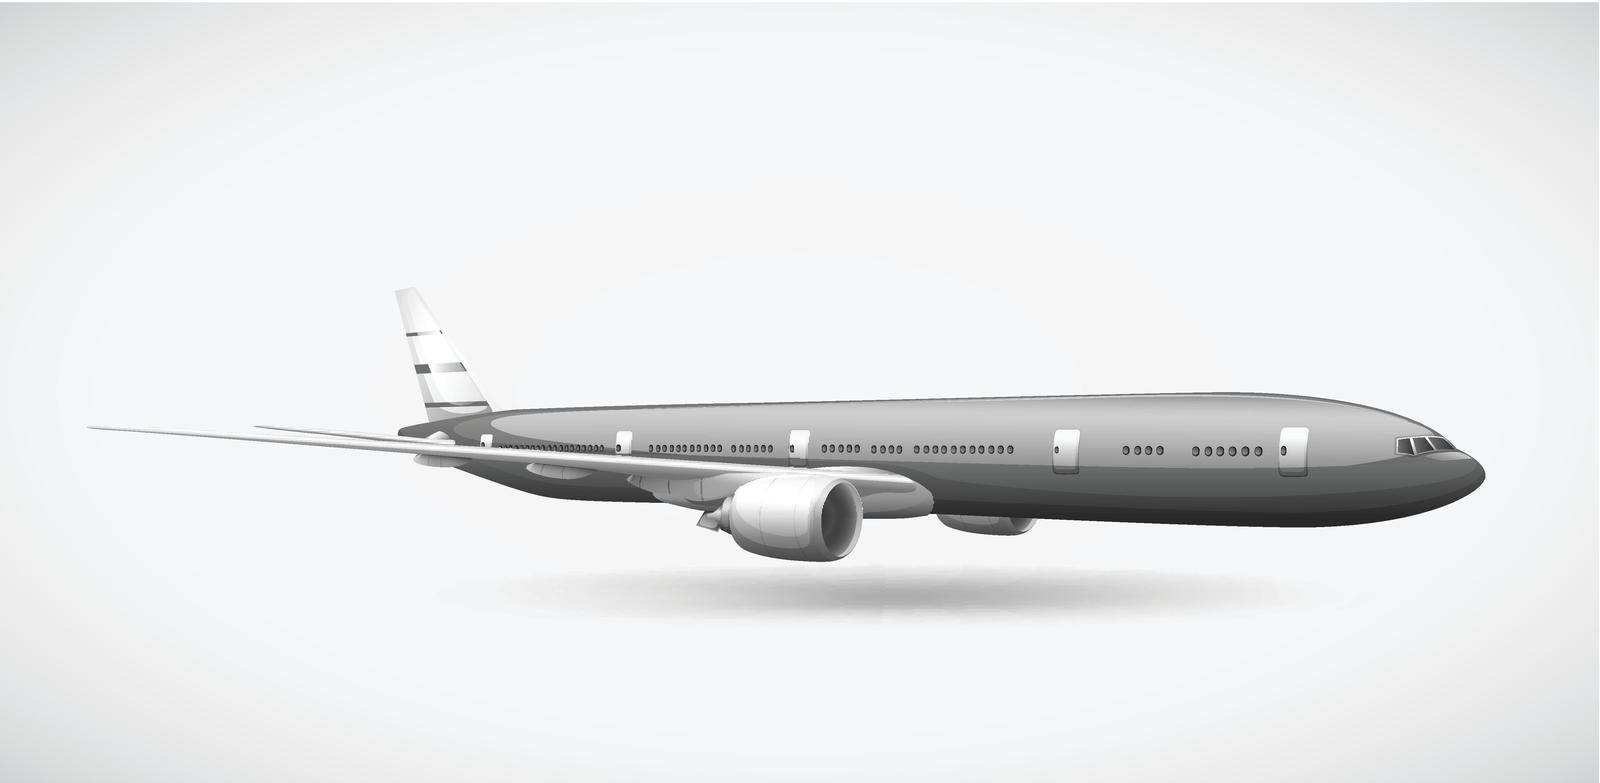 Illustration of a passenger plane